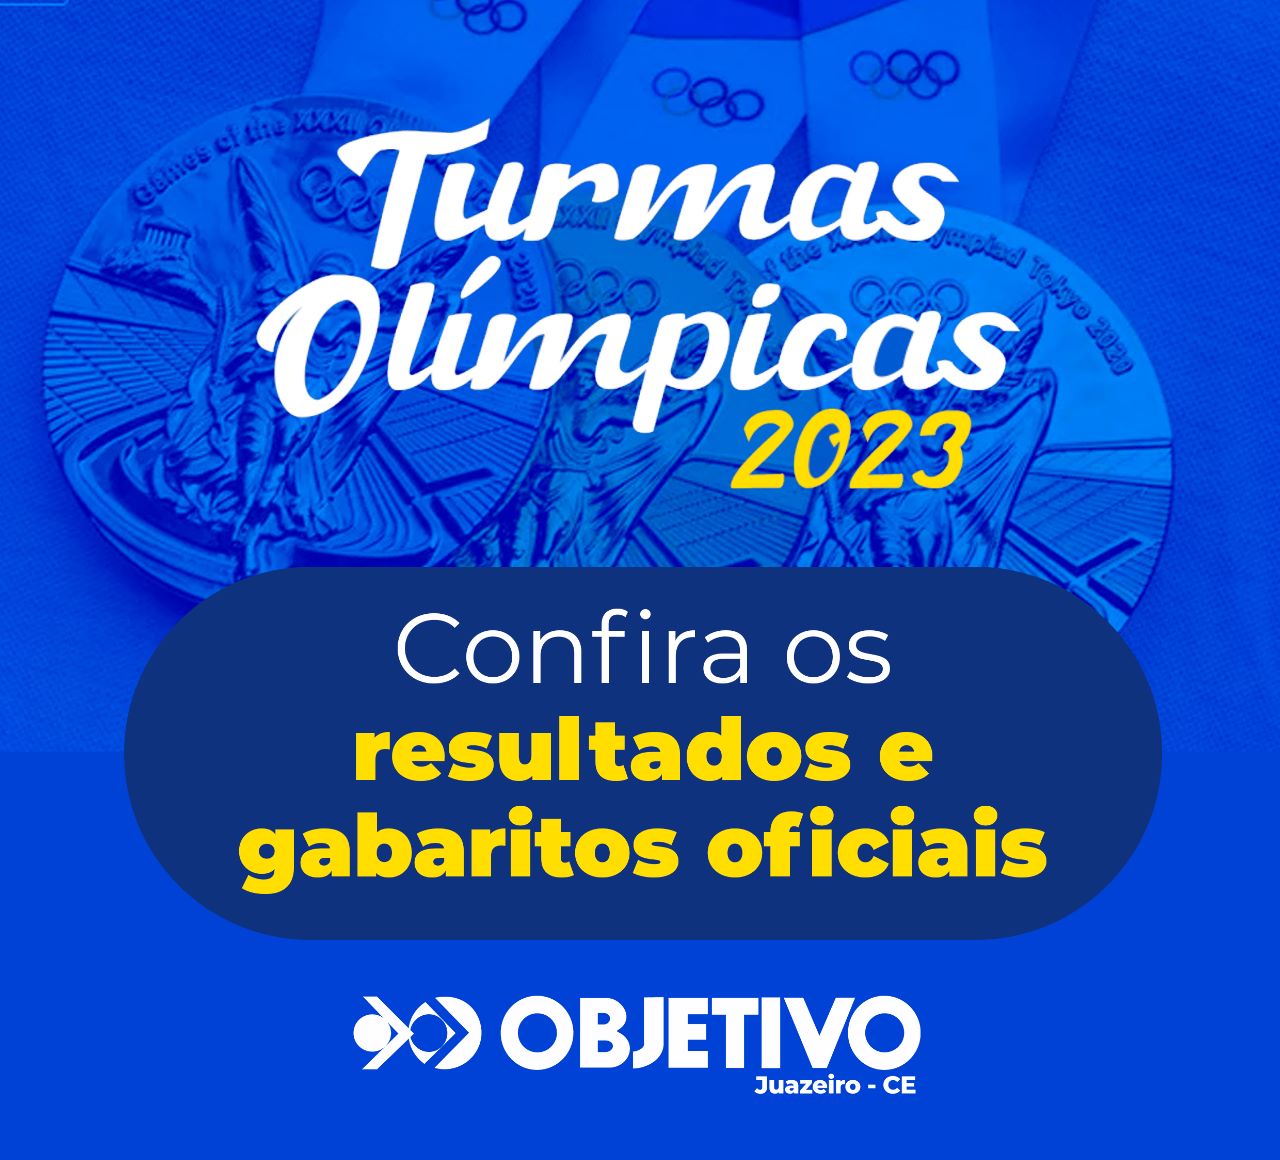 Turmas Olímpicas 2023: confira o resultado